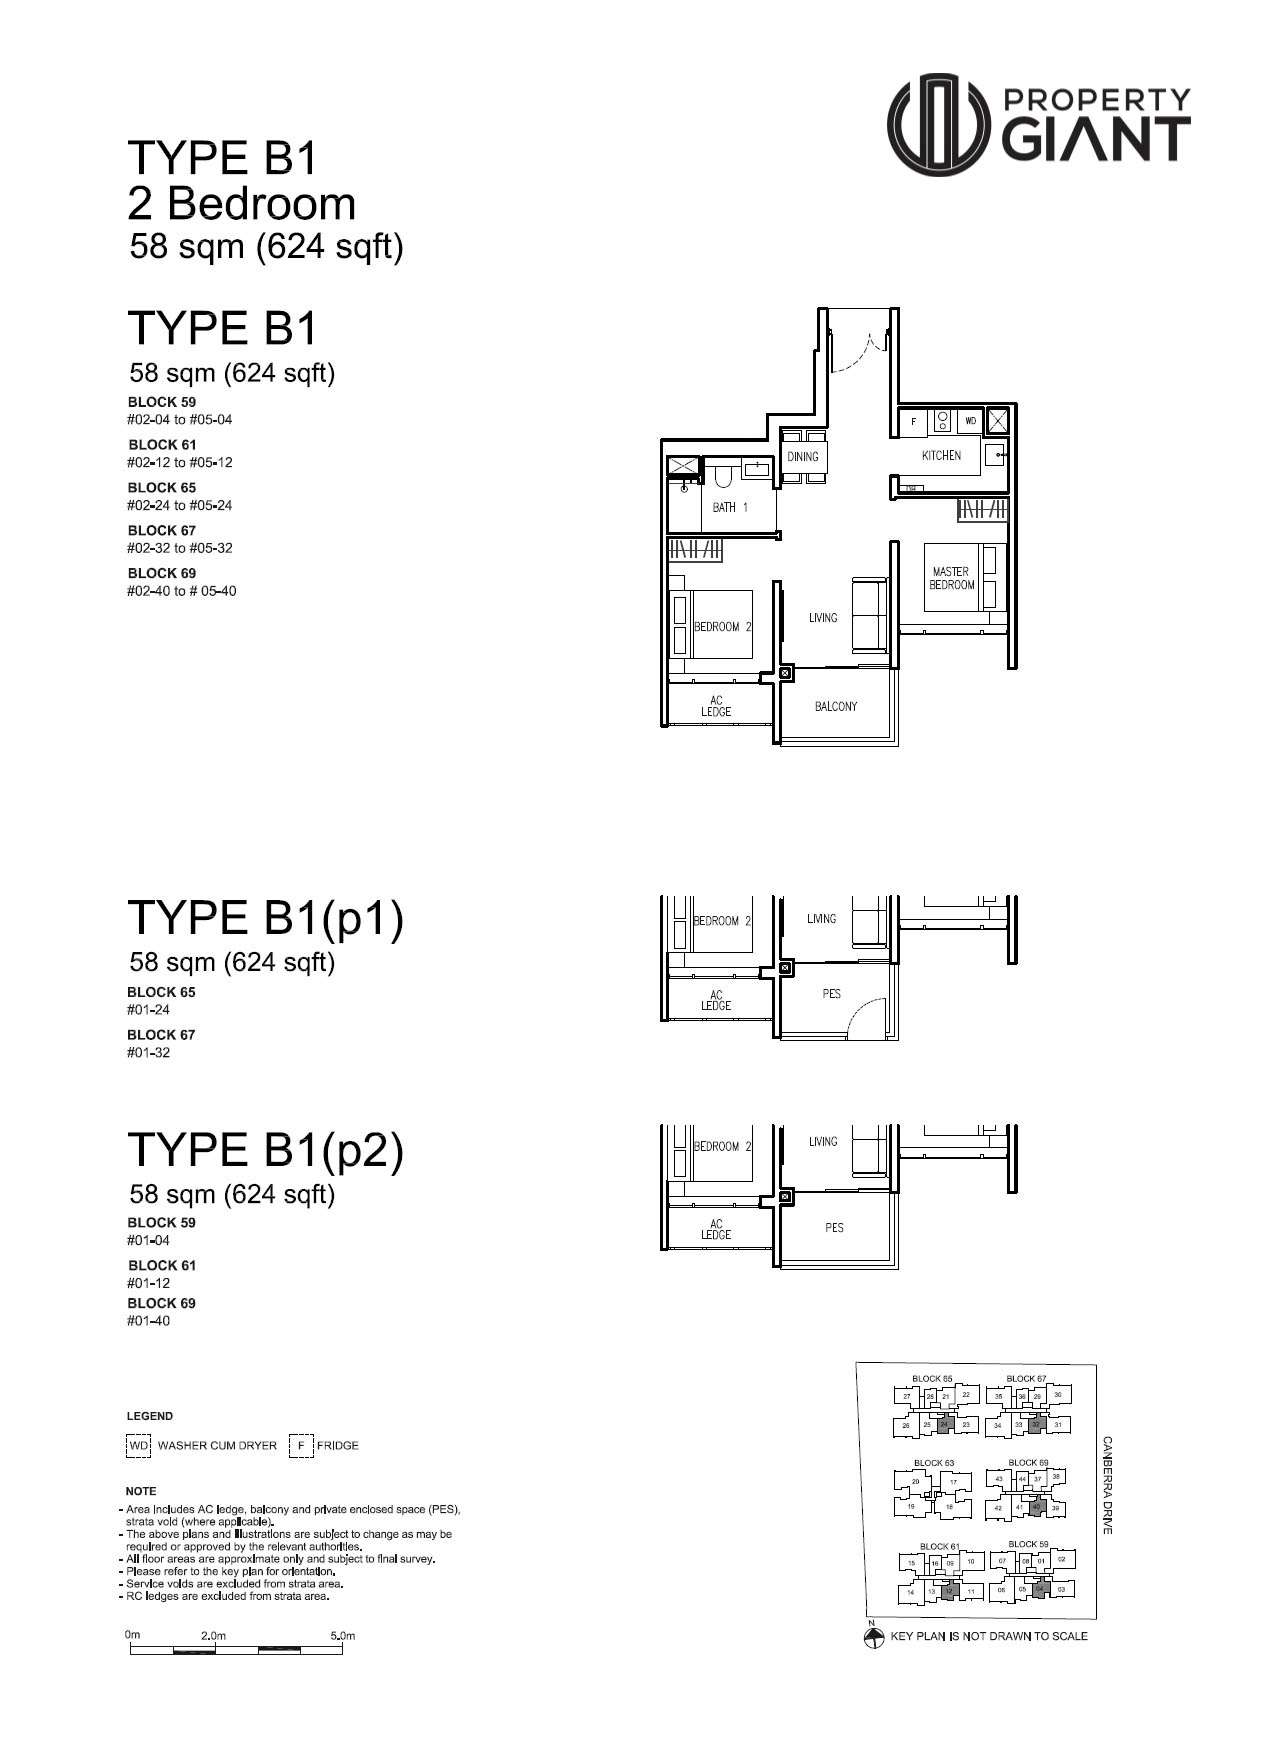 Type B1, B1(p1), B1(p2)